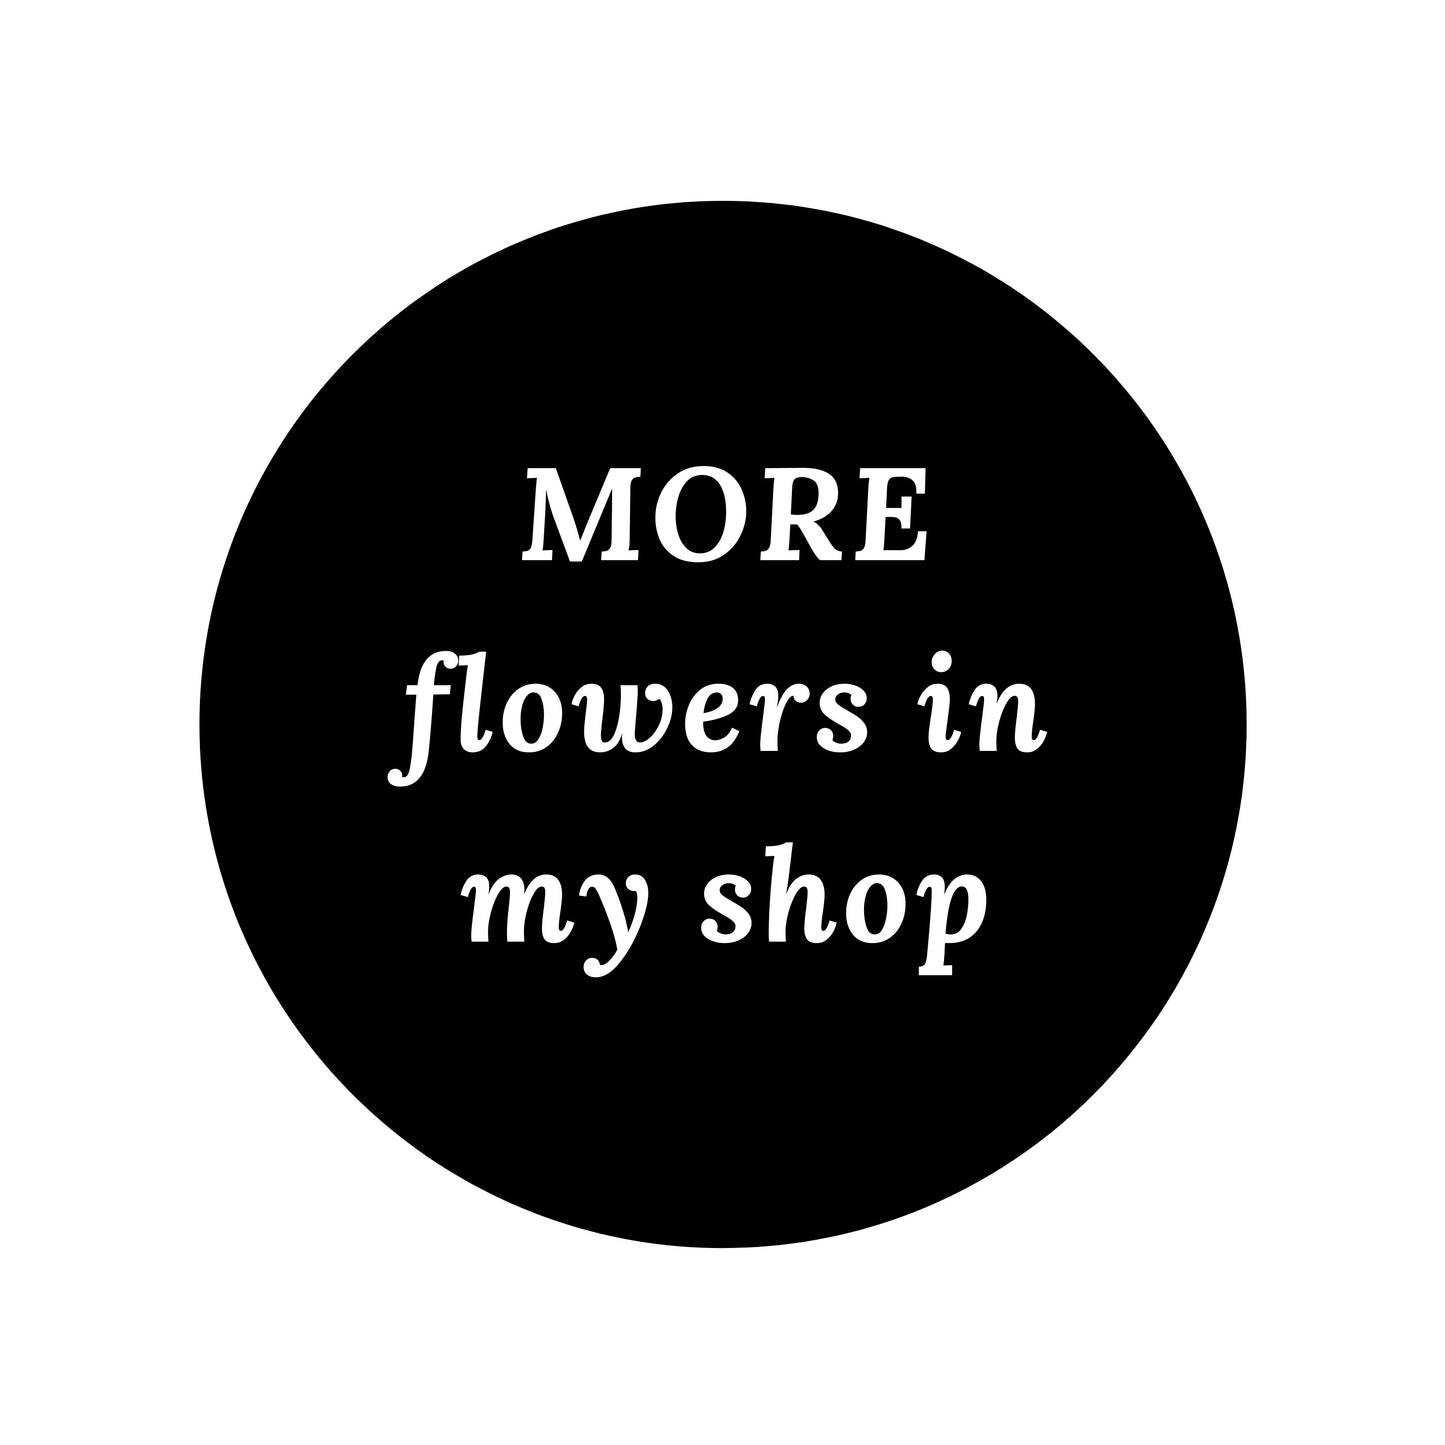 February Birth Flower Primrose | Oval Frame Simple Art Printable | Floral Line Art